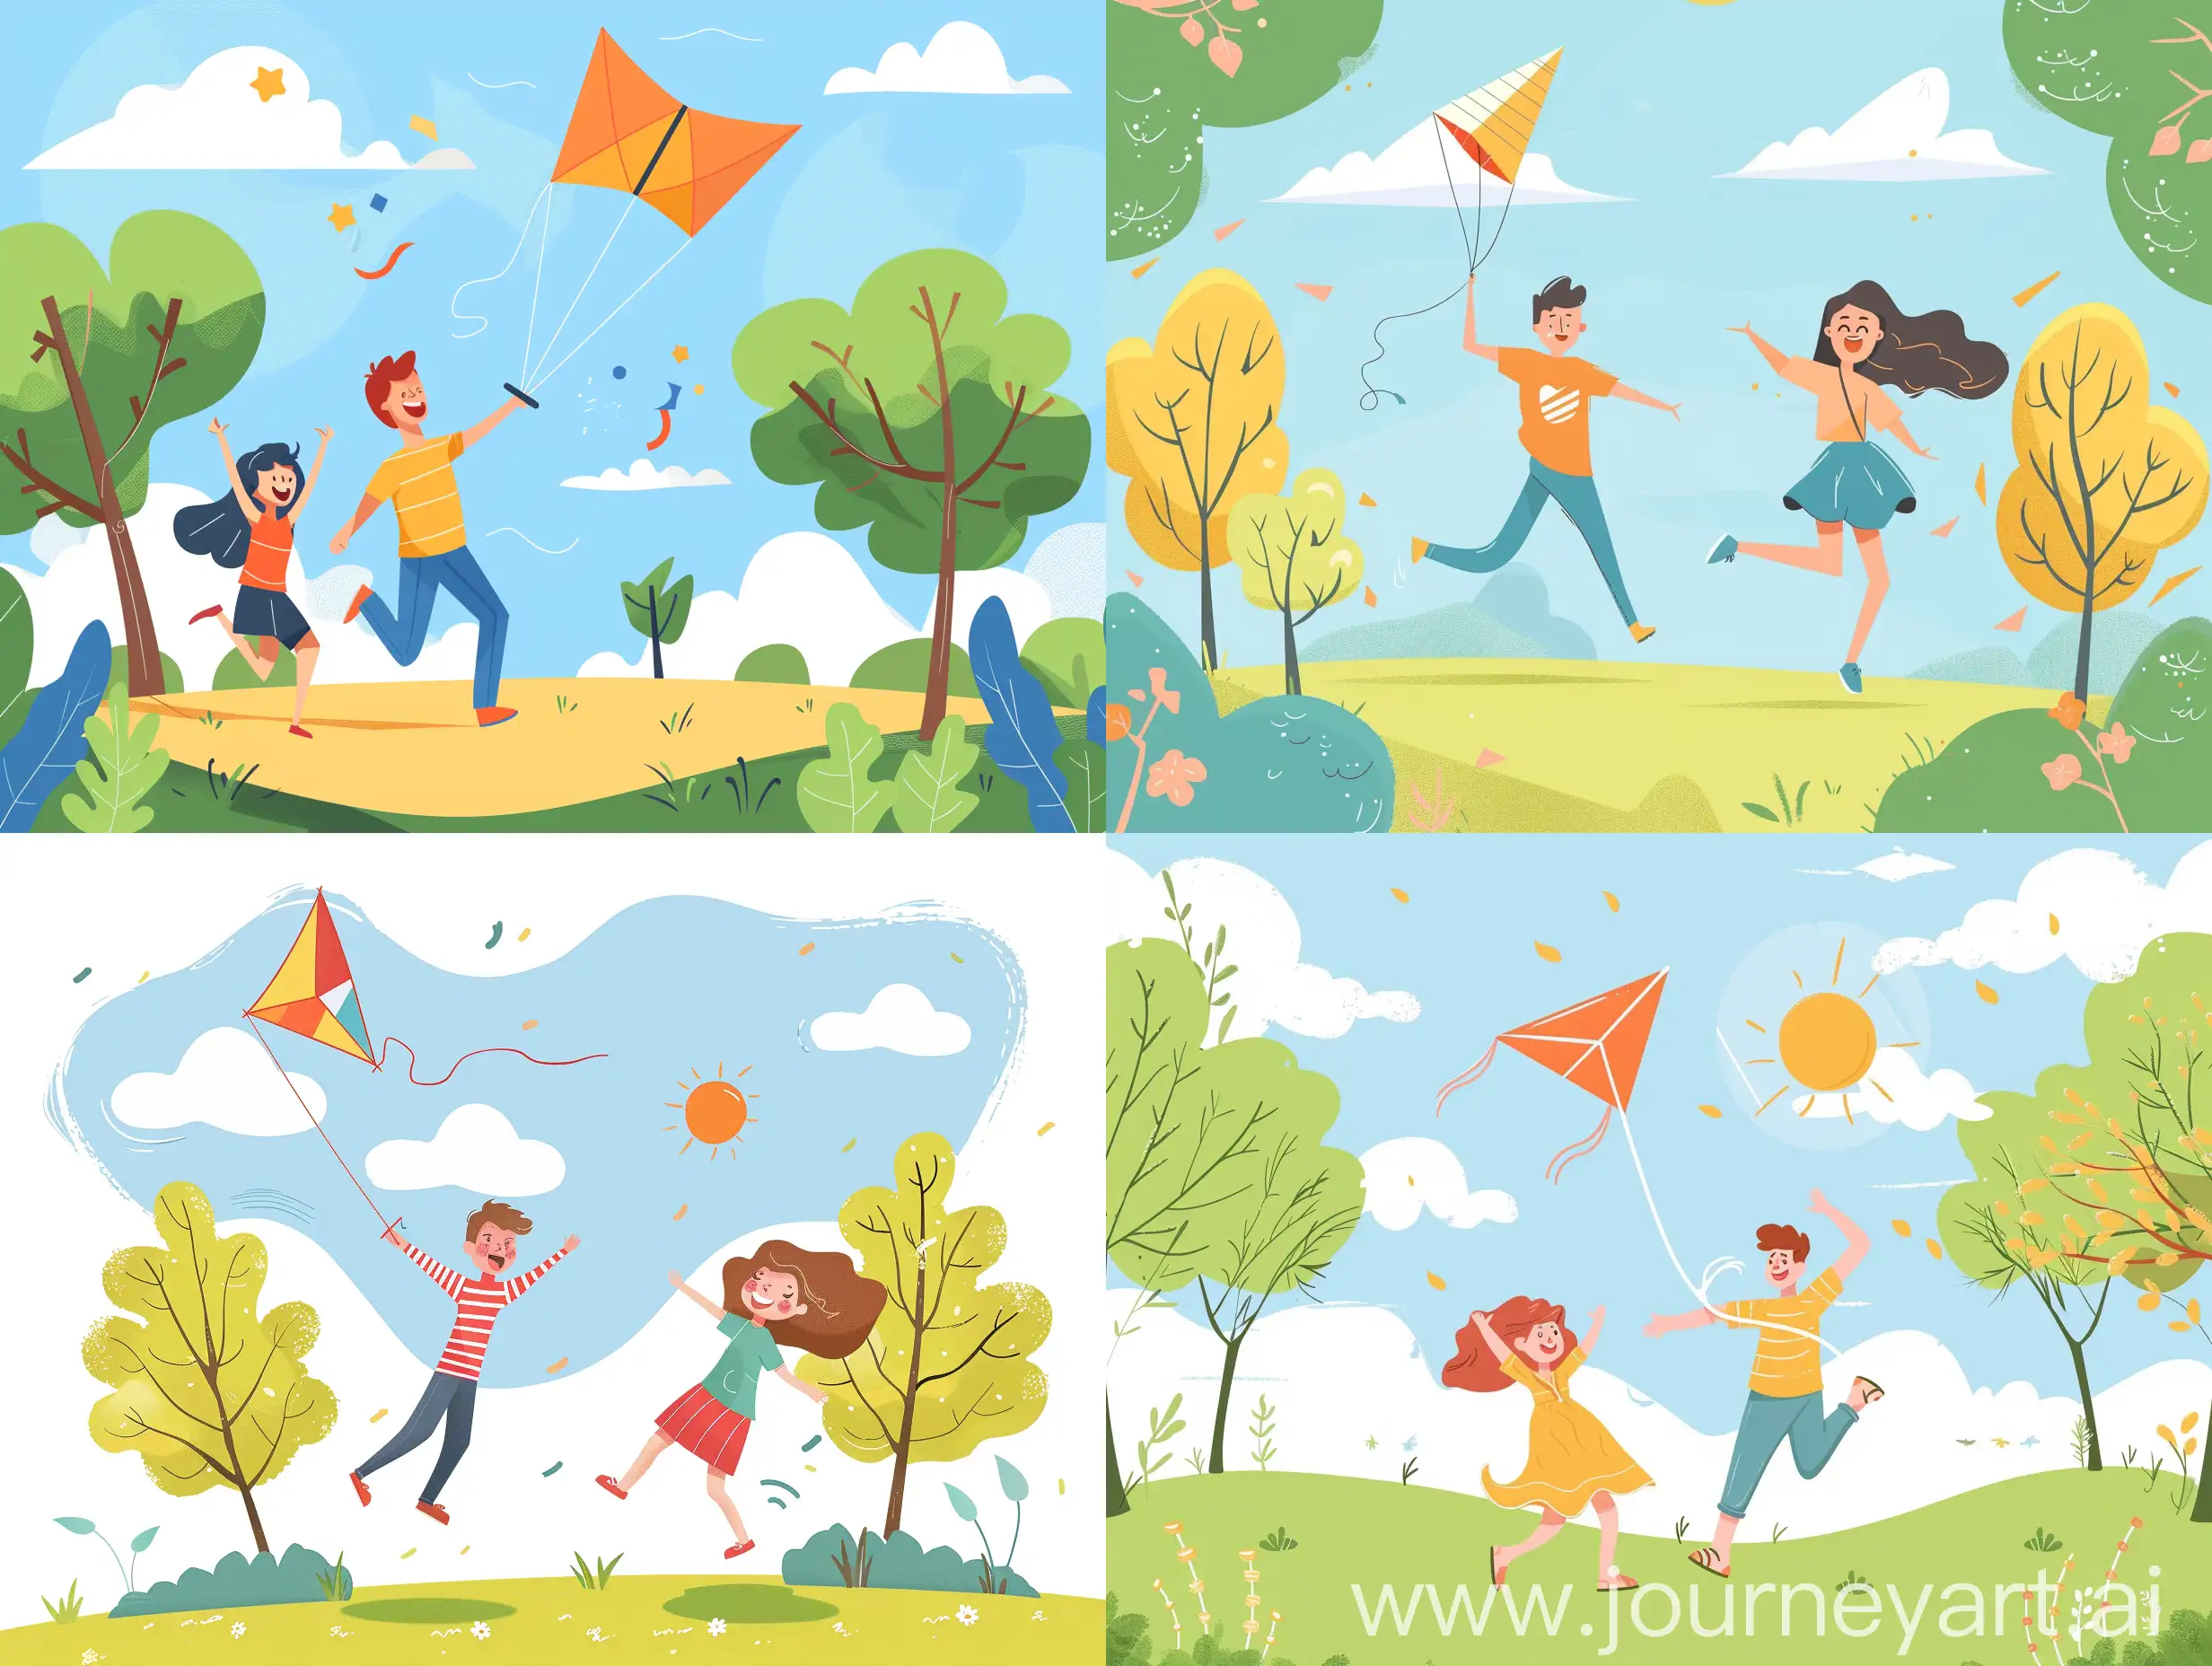 Couple-Enjoying-Kite-Flying-in-Sunny-Park-Outdoor-Summer-Fun